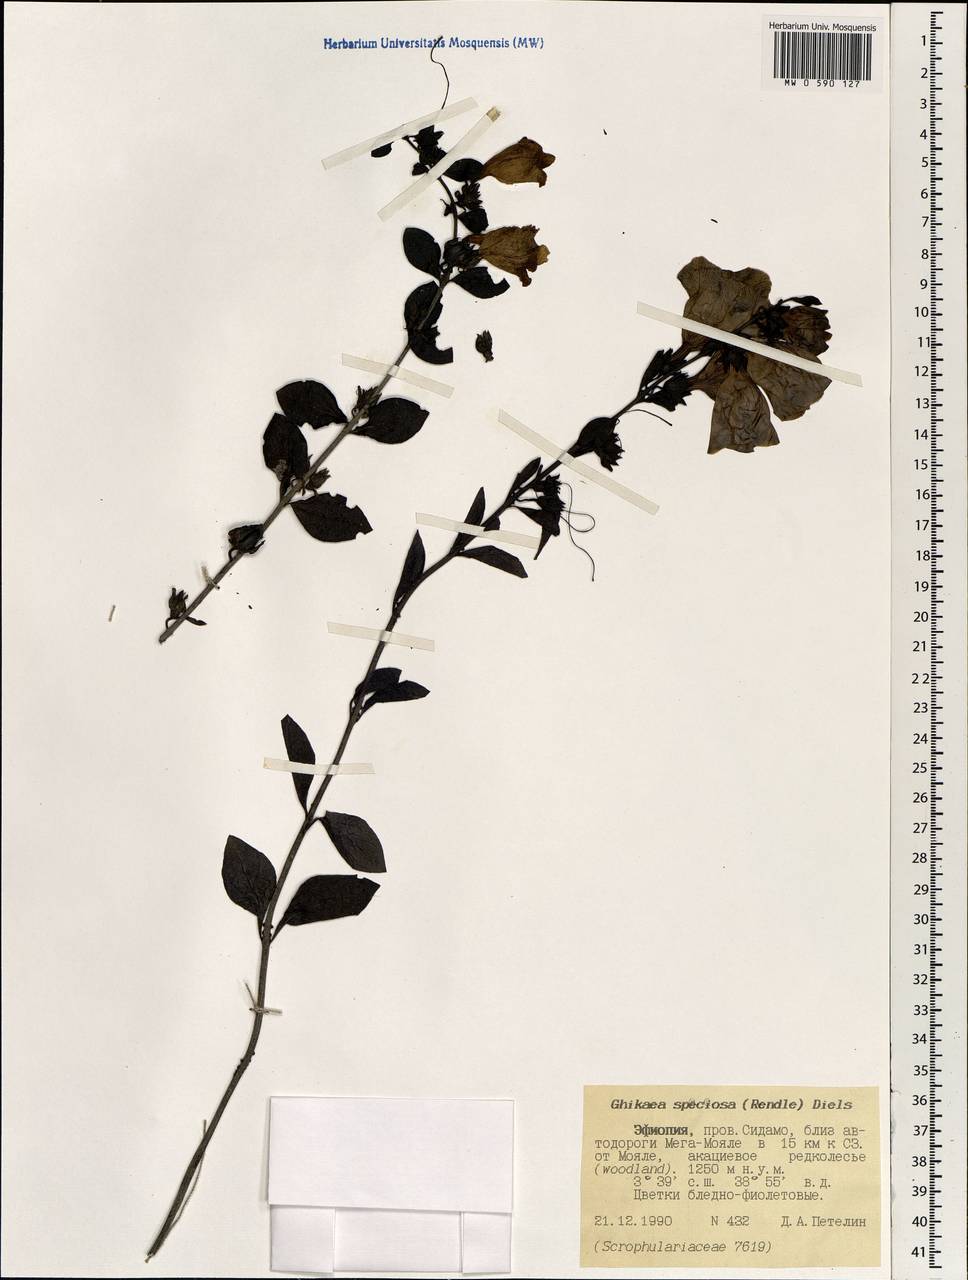 Ghikaea speciosa (Rendle) Diels, Африка (AFR) (Эфиопия)